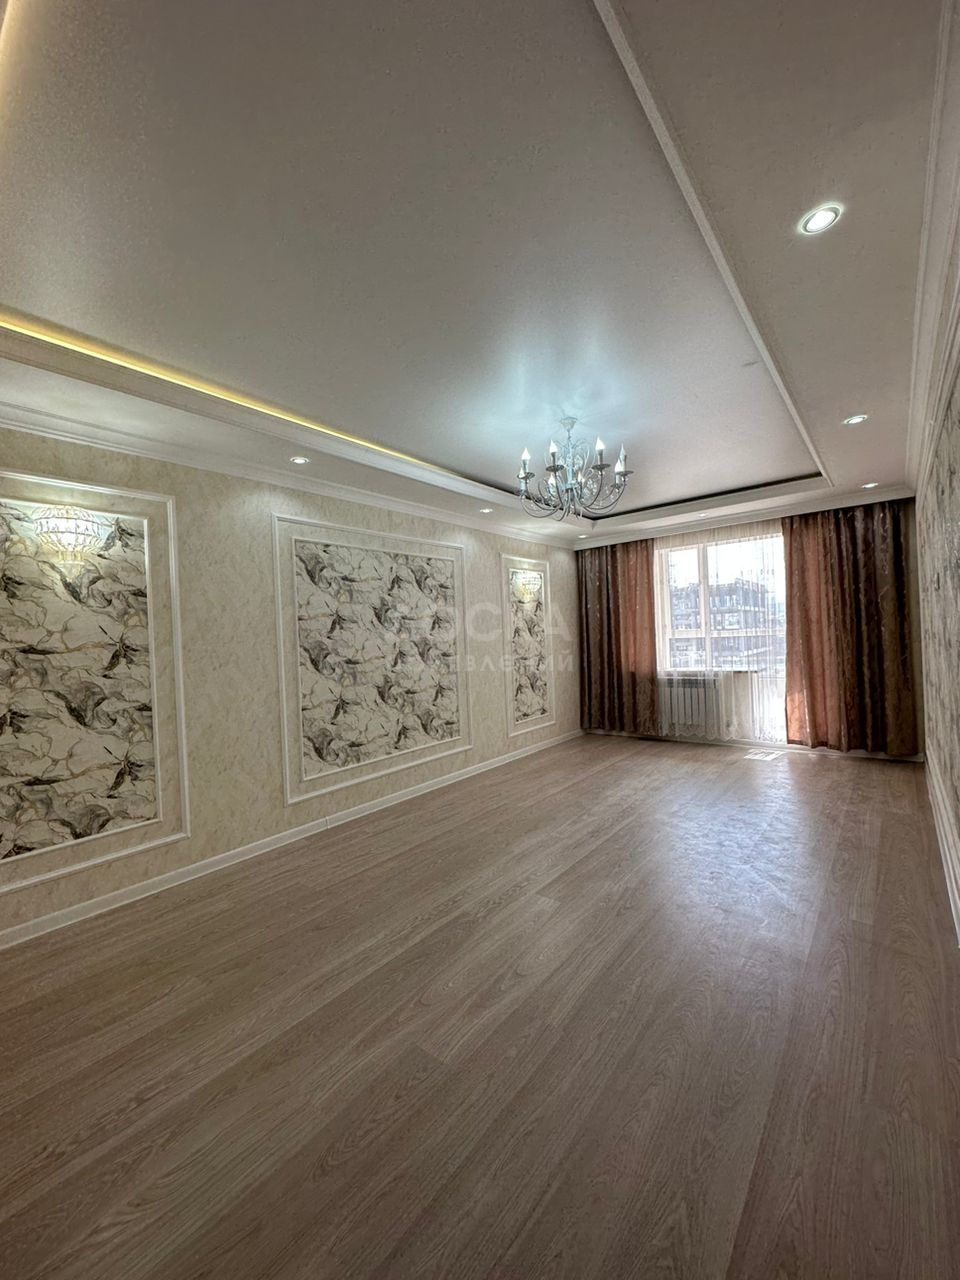 Продаю 1-комнатную квартиру, 53кв. м., этаж - 5/9, Анкара, 54500$.